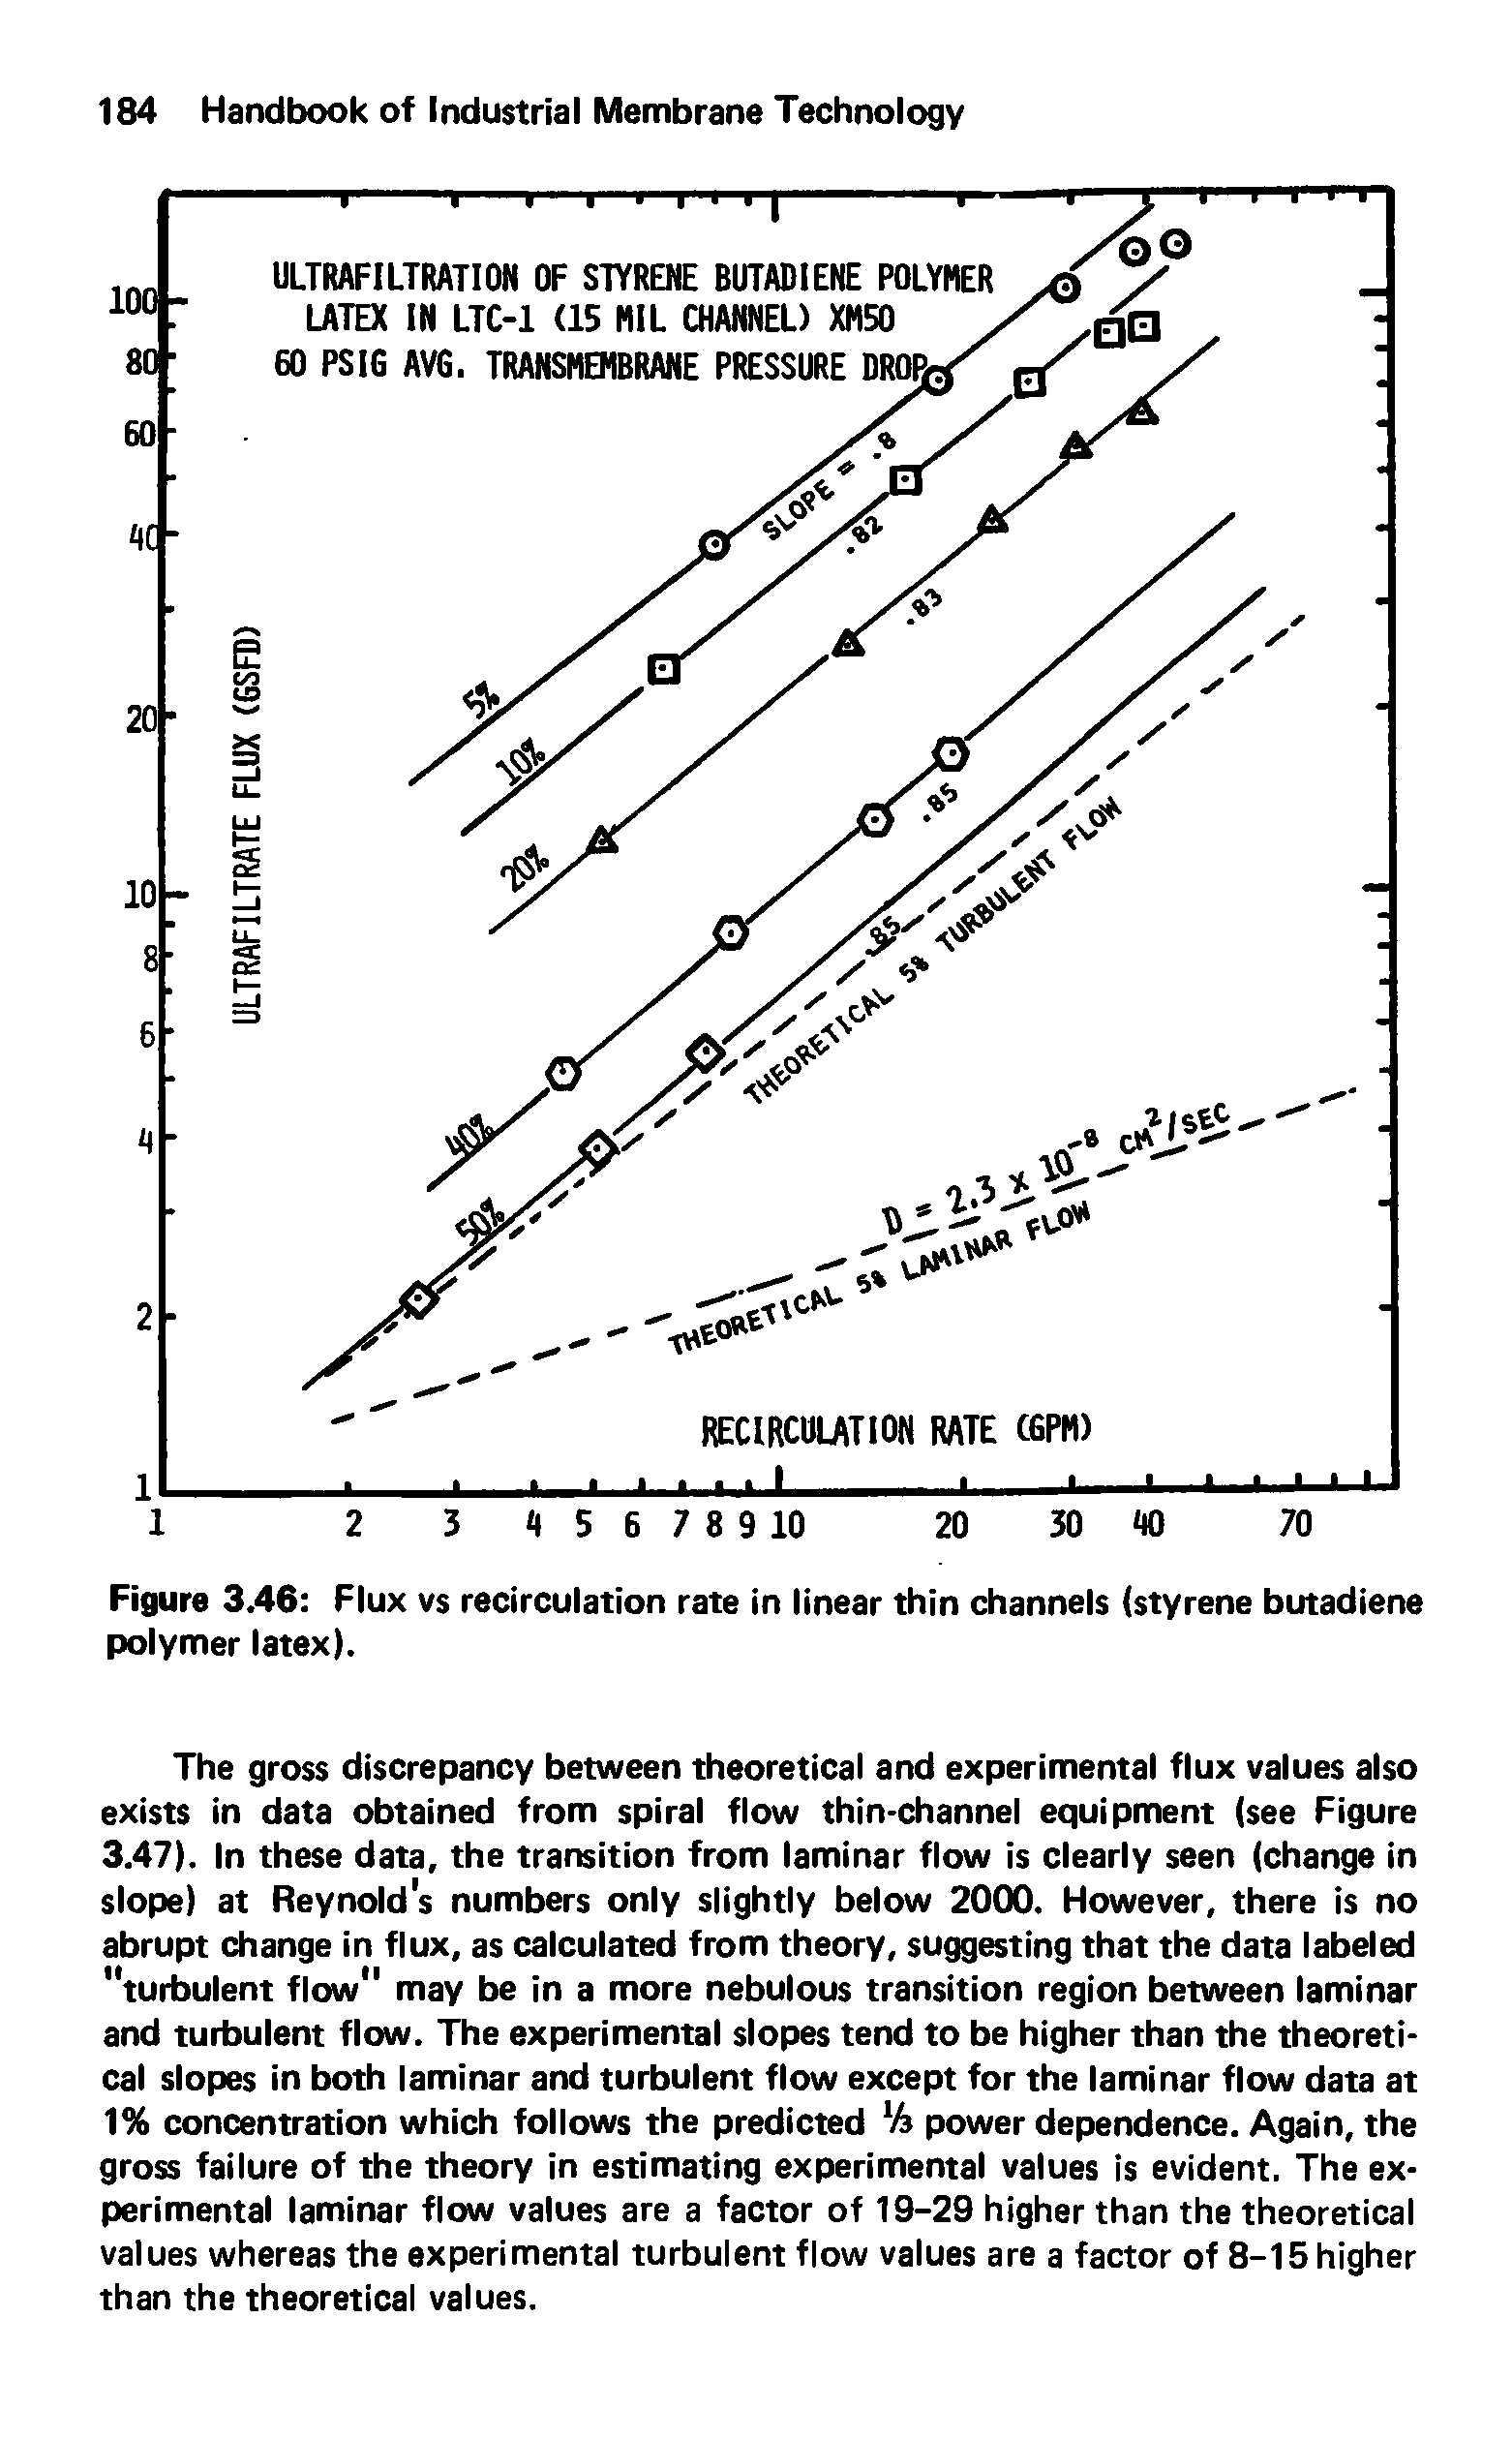 Figure 3.46 Flux vs recirculation rate in linear thin channels (styrene butadiene polymer latex).